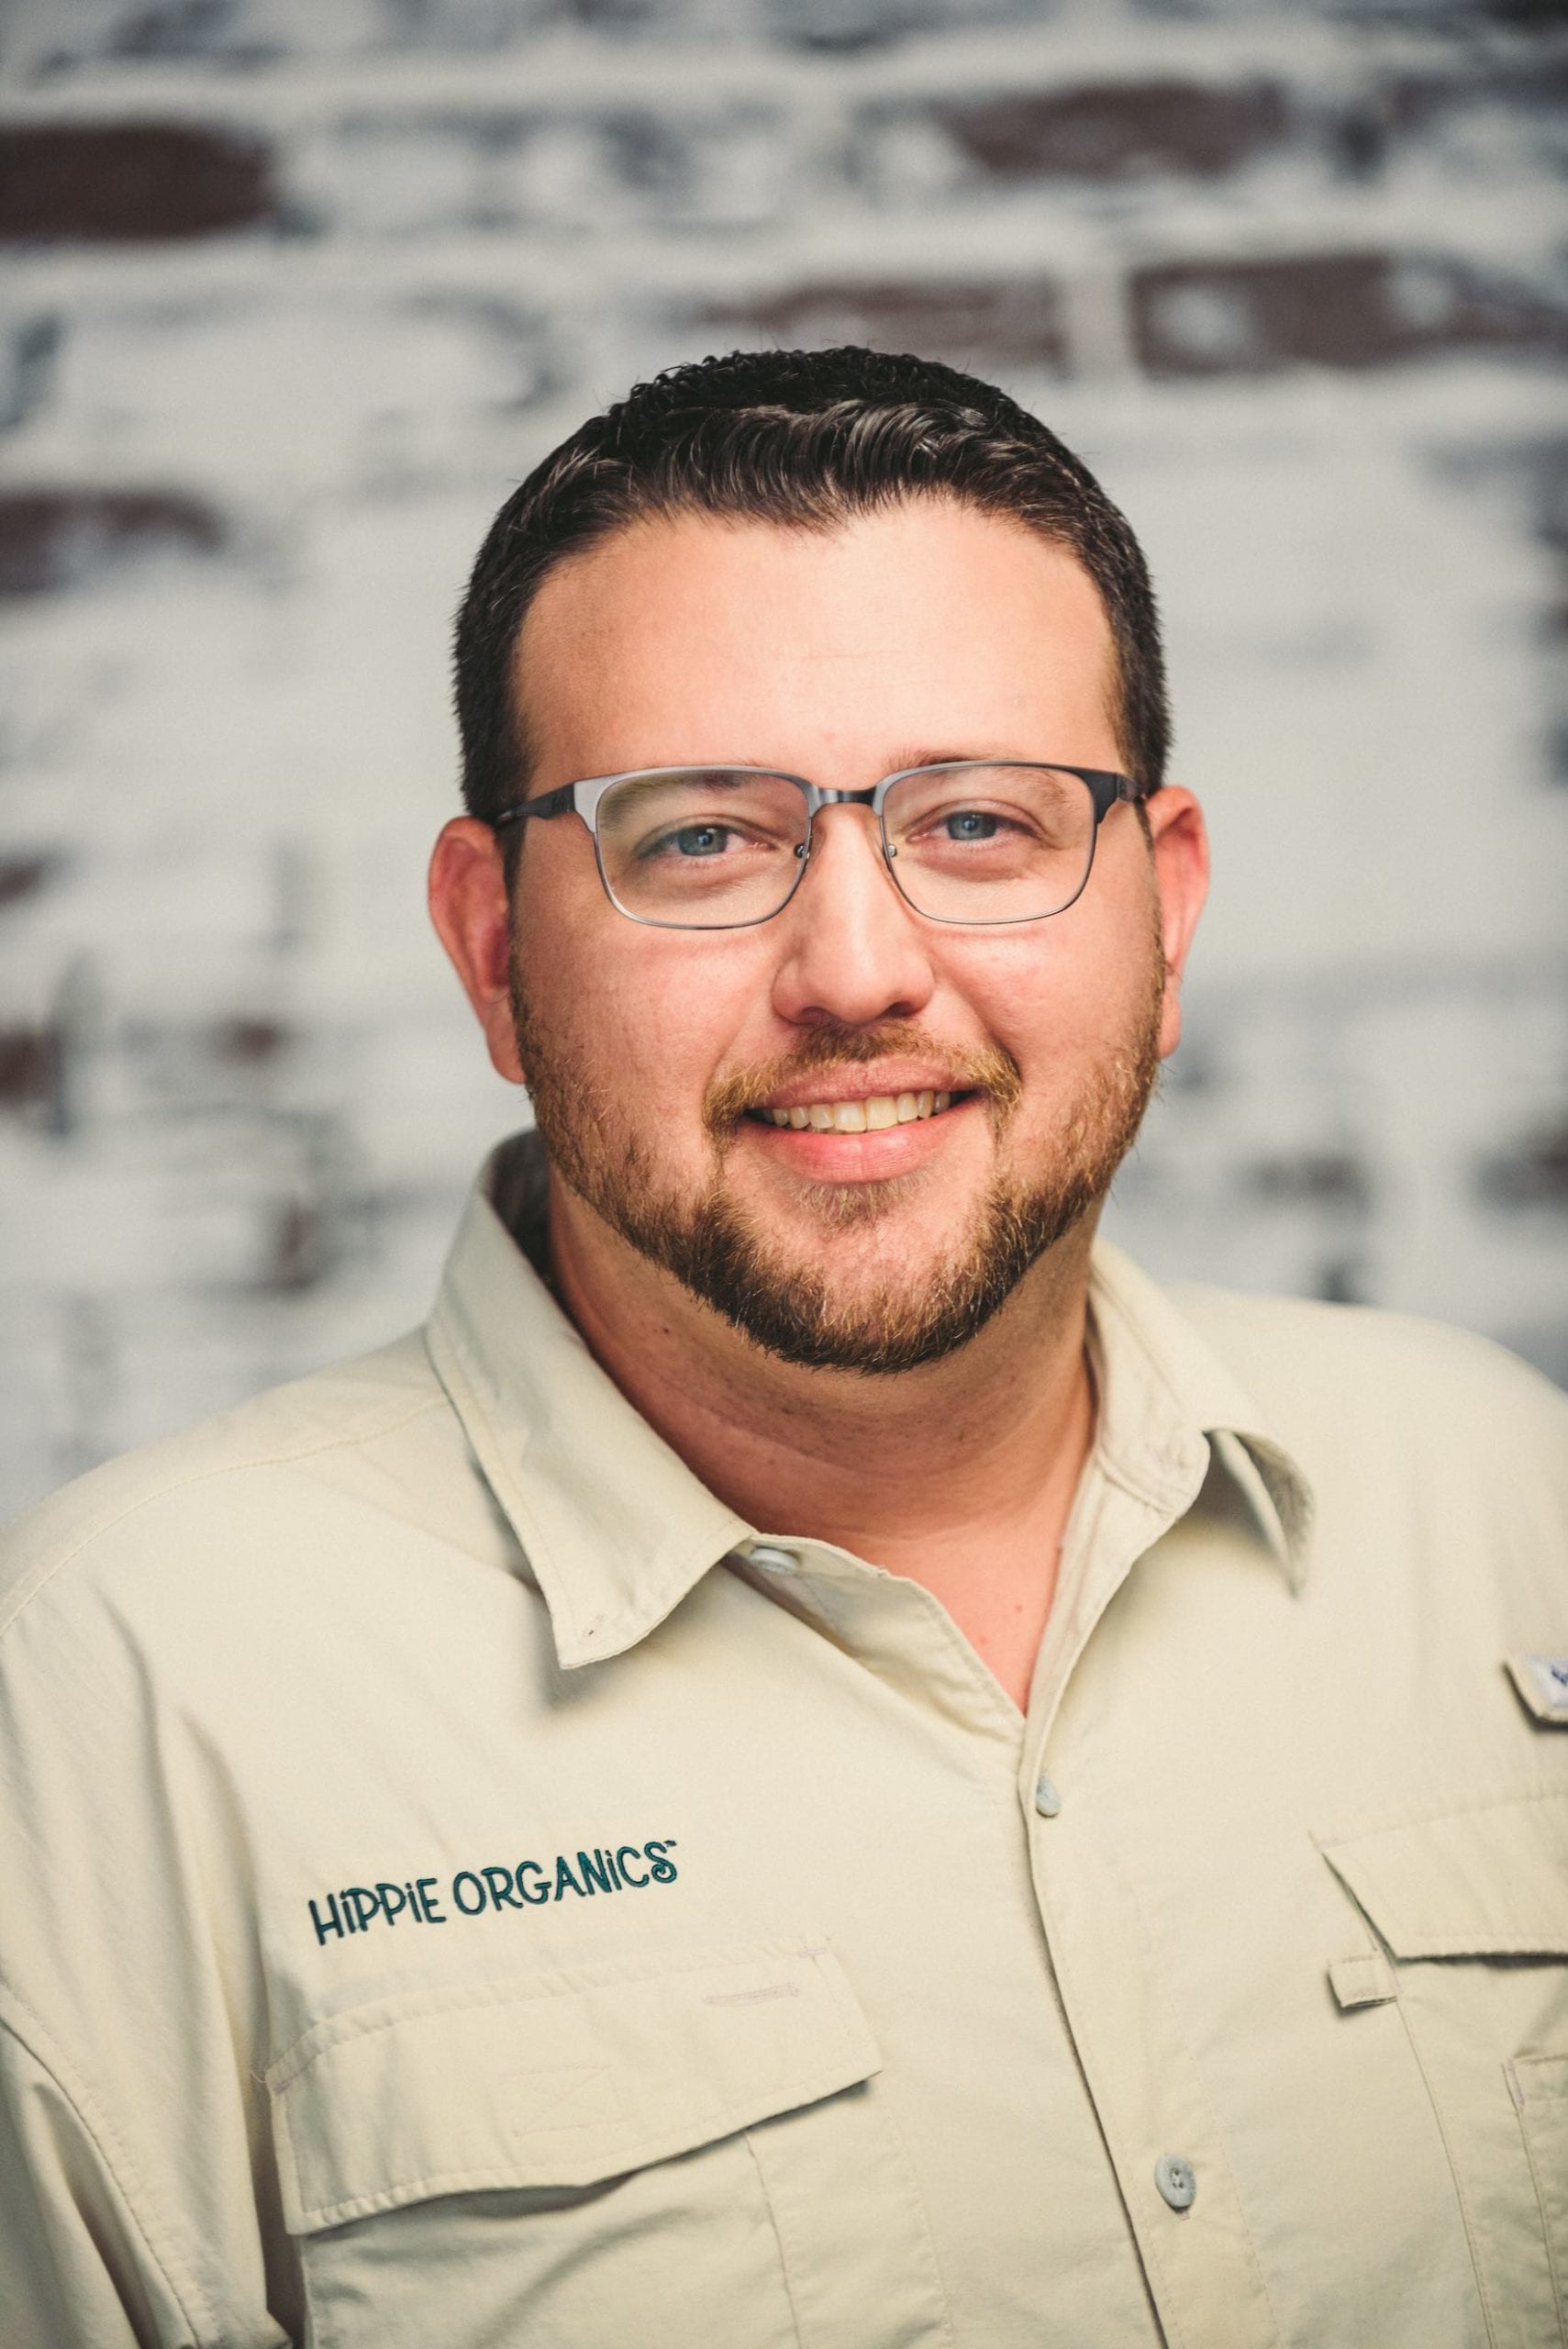 Headshot of male Hippee Organics employee with short hair and beard wearing glasses wearing beige uniform